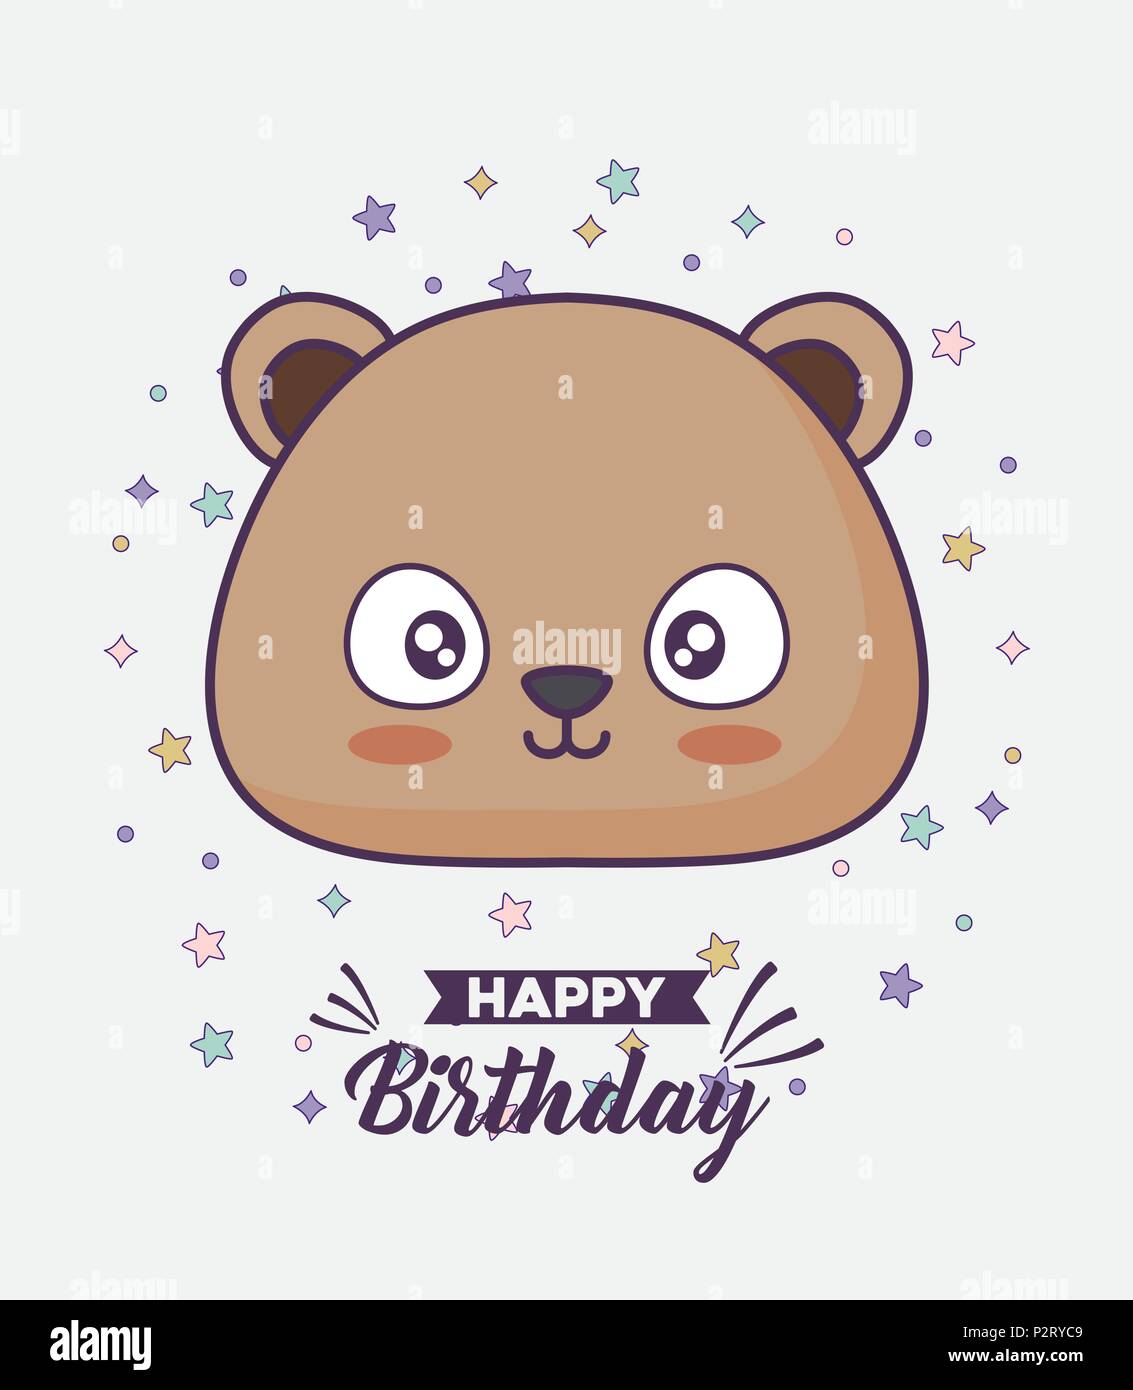 Carte D Anniversaire Avec Cute Bear Kawaii Character Vector Illustration Design Image Vectorielle Stock Alamy